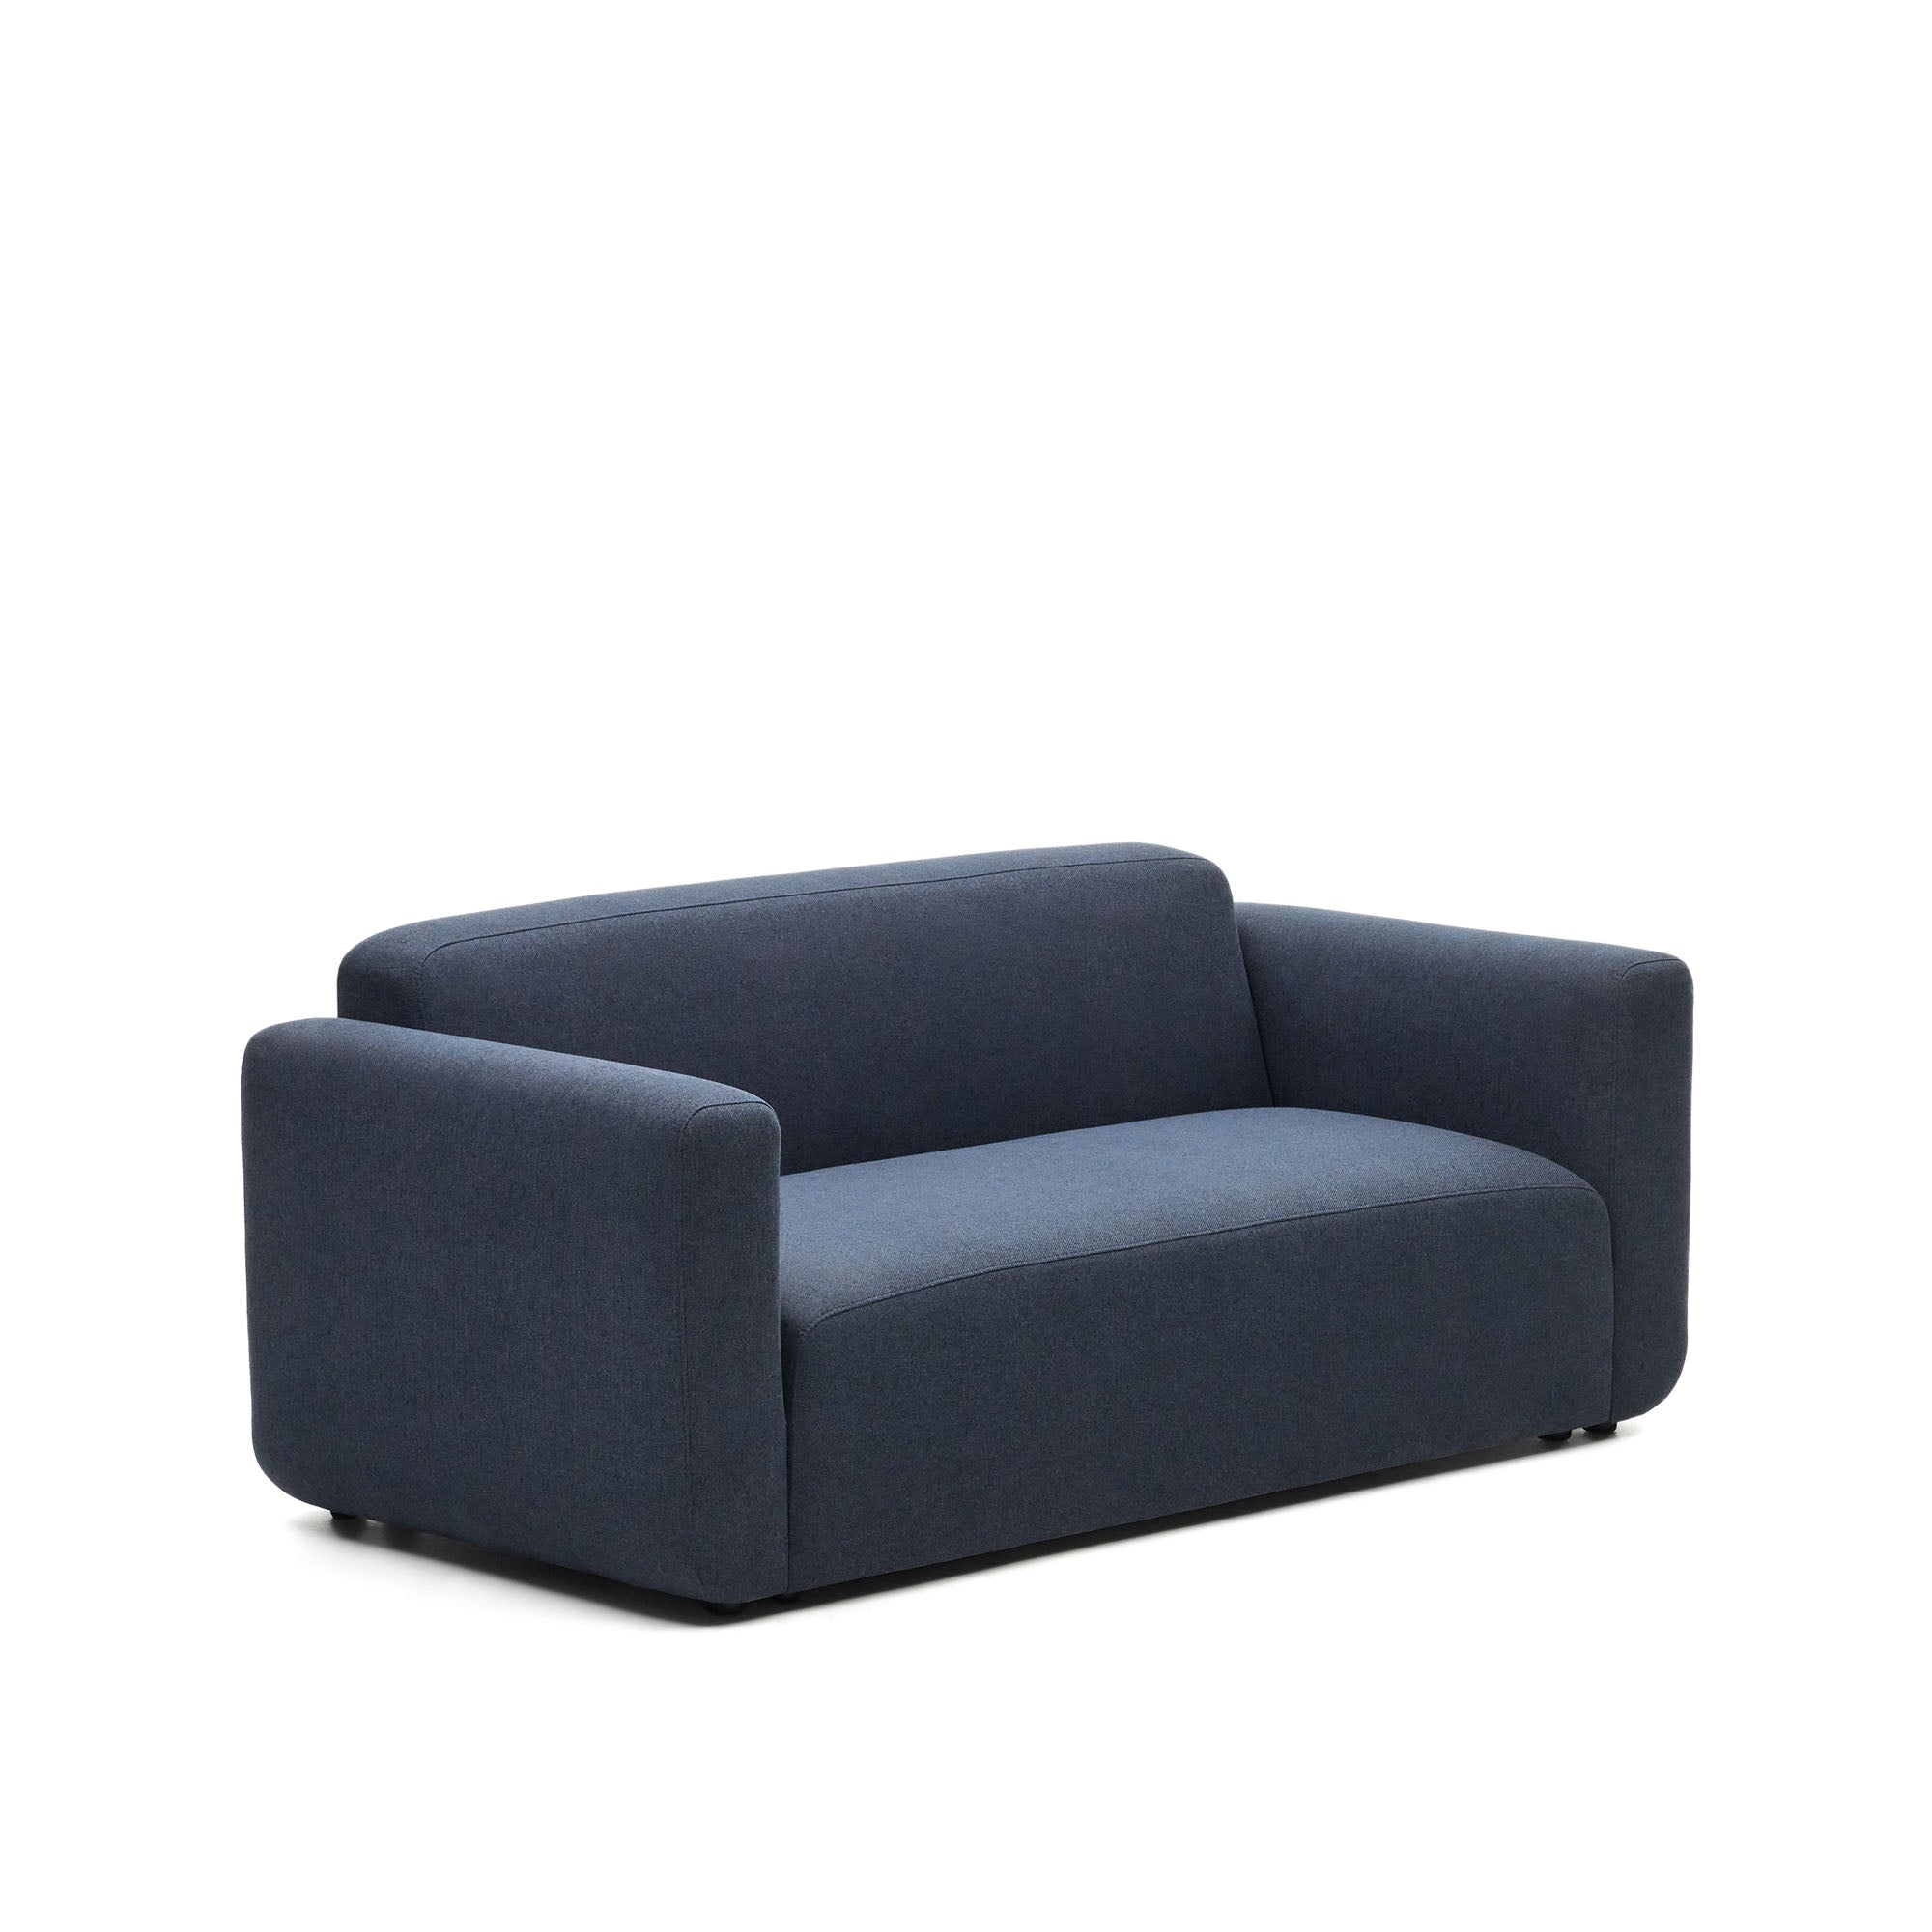 Neom 2 seater modular sofa in blue, 188 cm